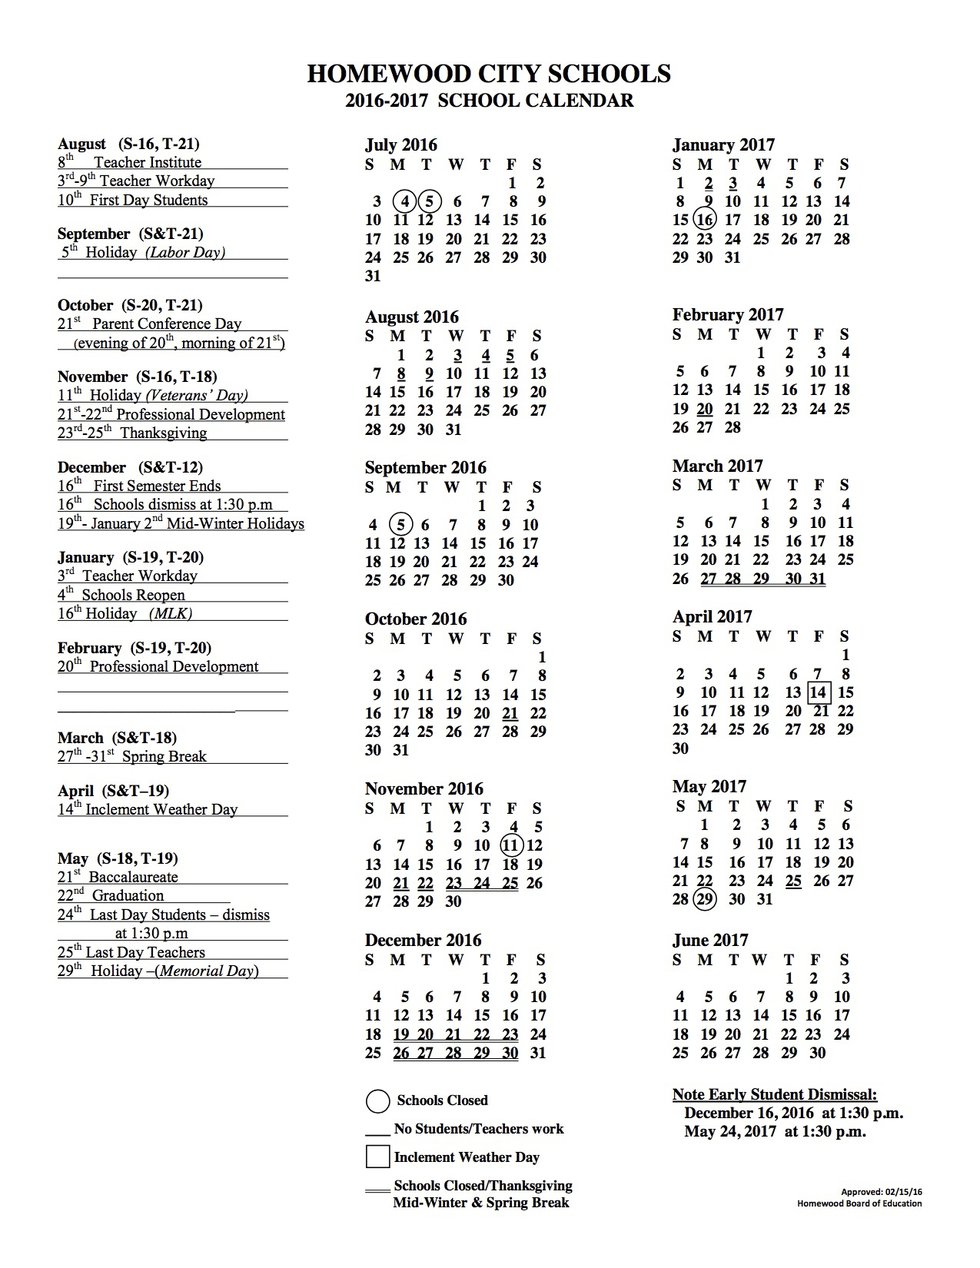 Homewood Calendar